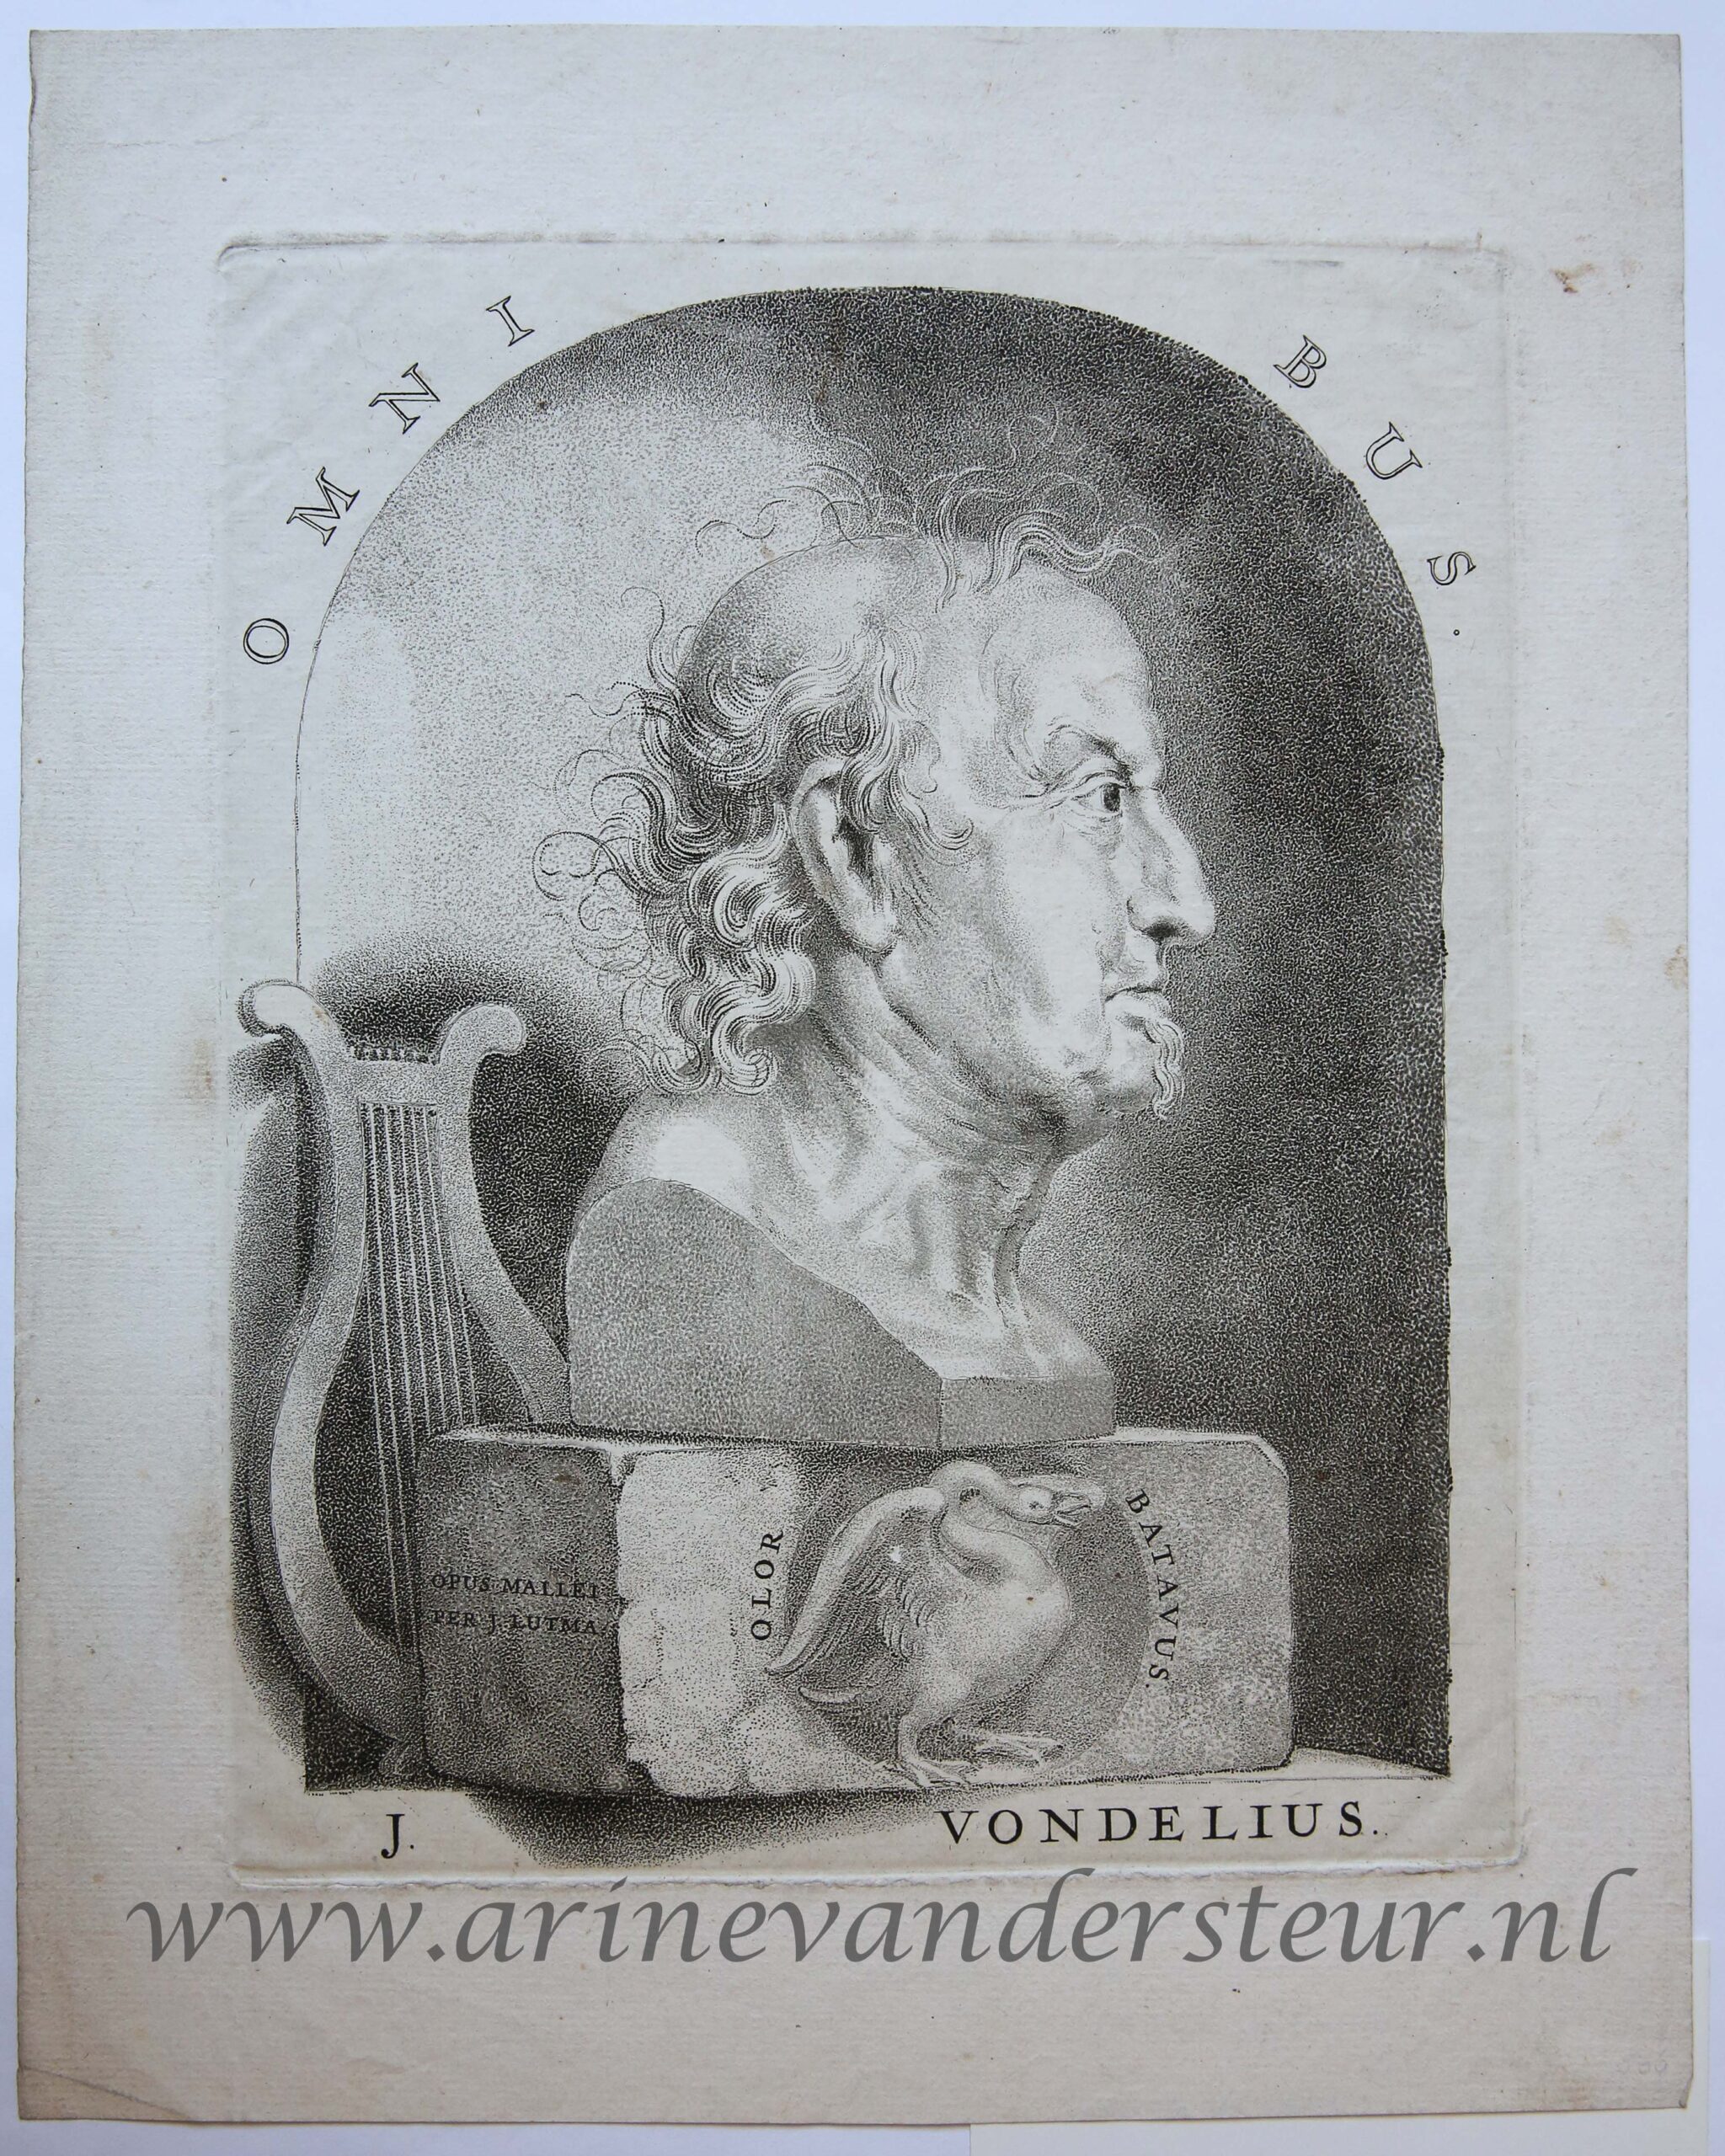 [Antique print, engraving] J VONDELIUS (dichter Joost van den Vondel), published ca. 1681.